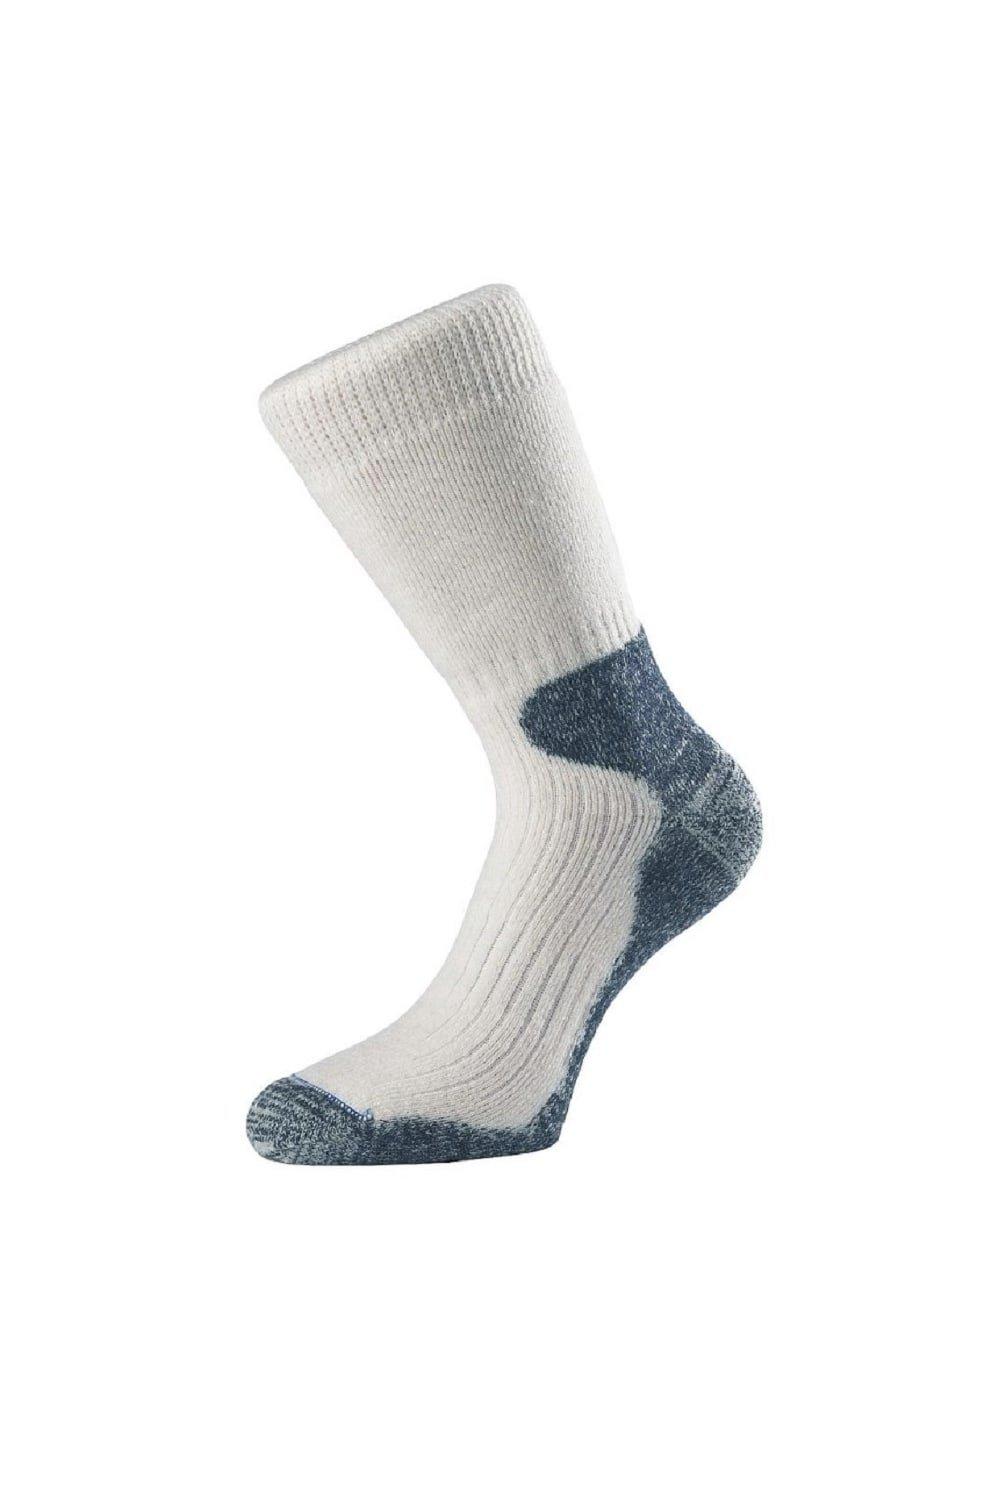 Ultra Wool Heavyweight Cricket Socks